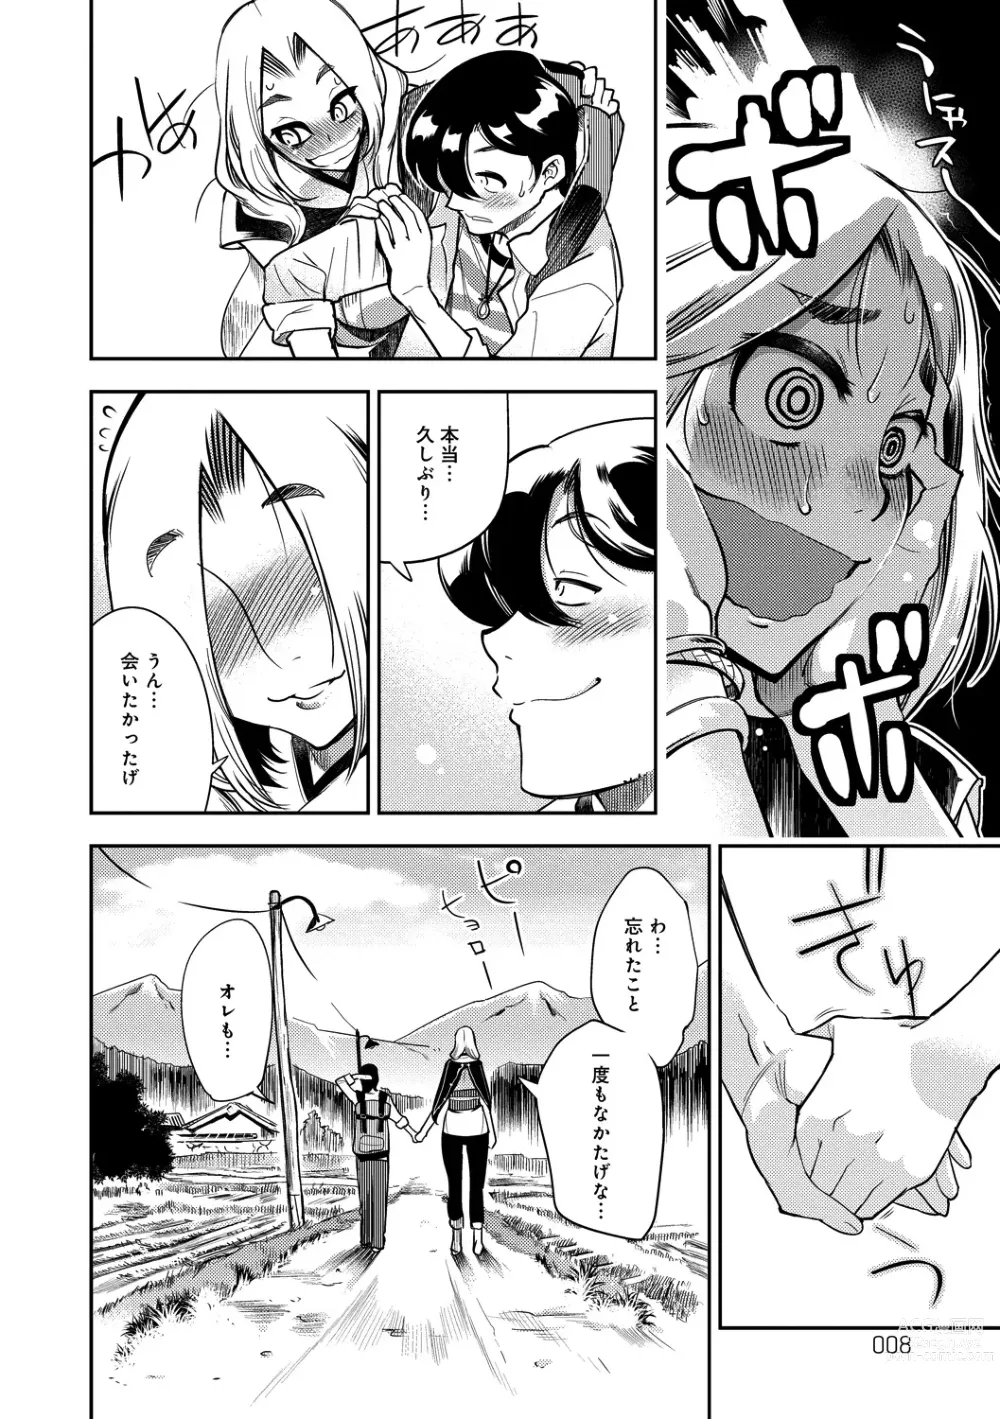 Page 8 of manga Hamekko 3Peace!!!